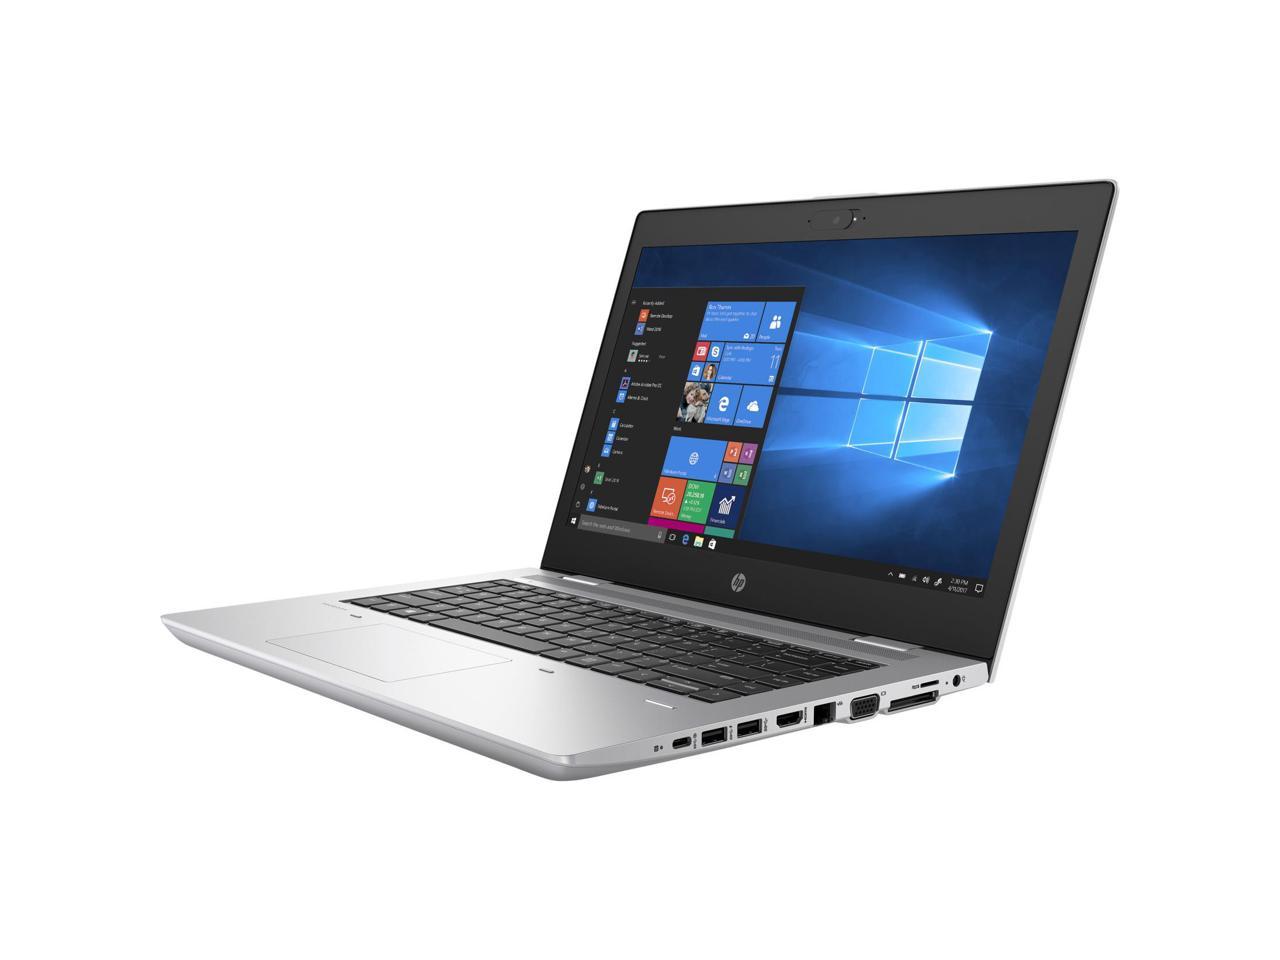 HP Laptop ProBook 640 G4 (5EL16UT#ABA) Intel Core i5 8th Gen 8250U (1.60 GHz) 8 GB Memory 500 GB HDD Intel UHD Graphics 620 14.0" Windows 10 Pro 64-bit